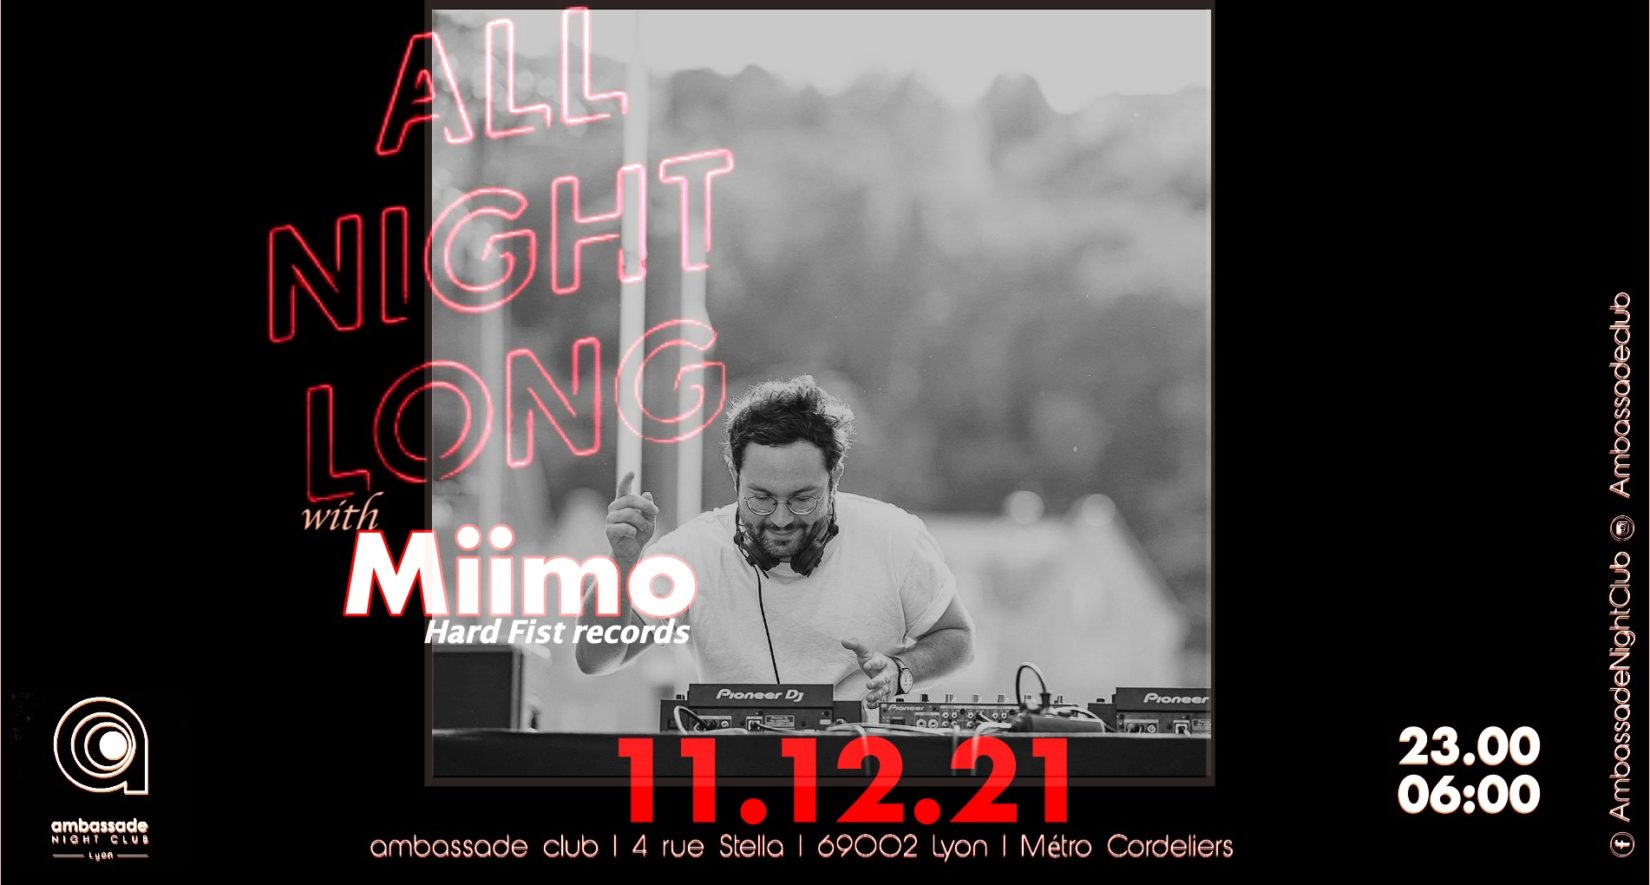 All night long – Miimo